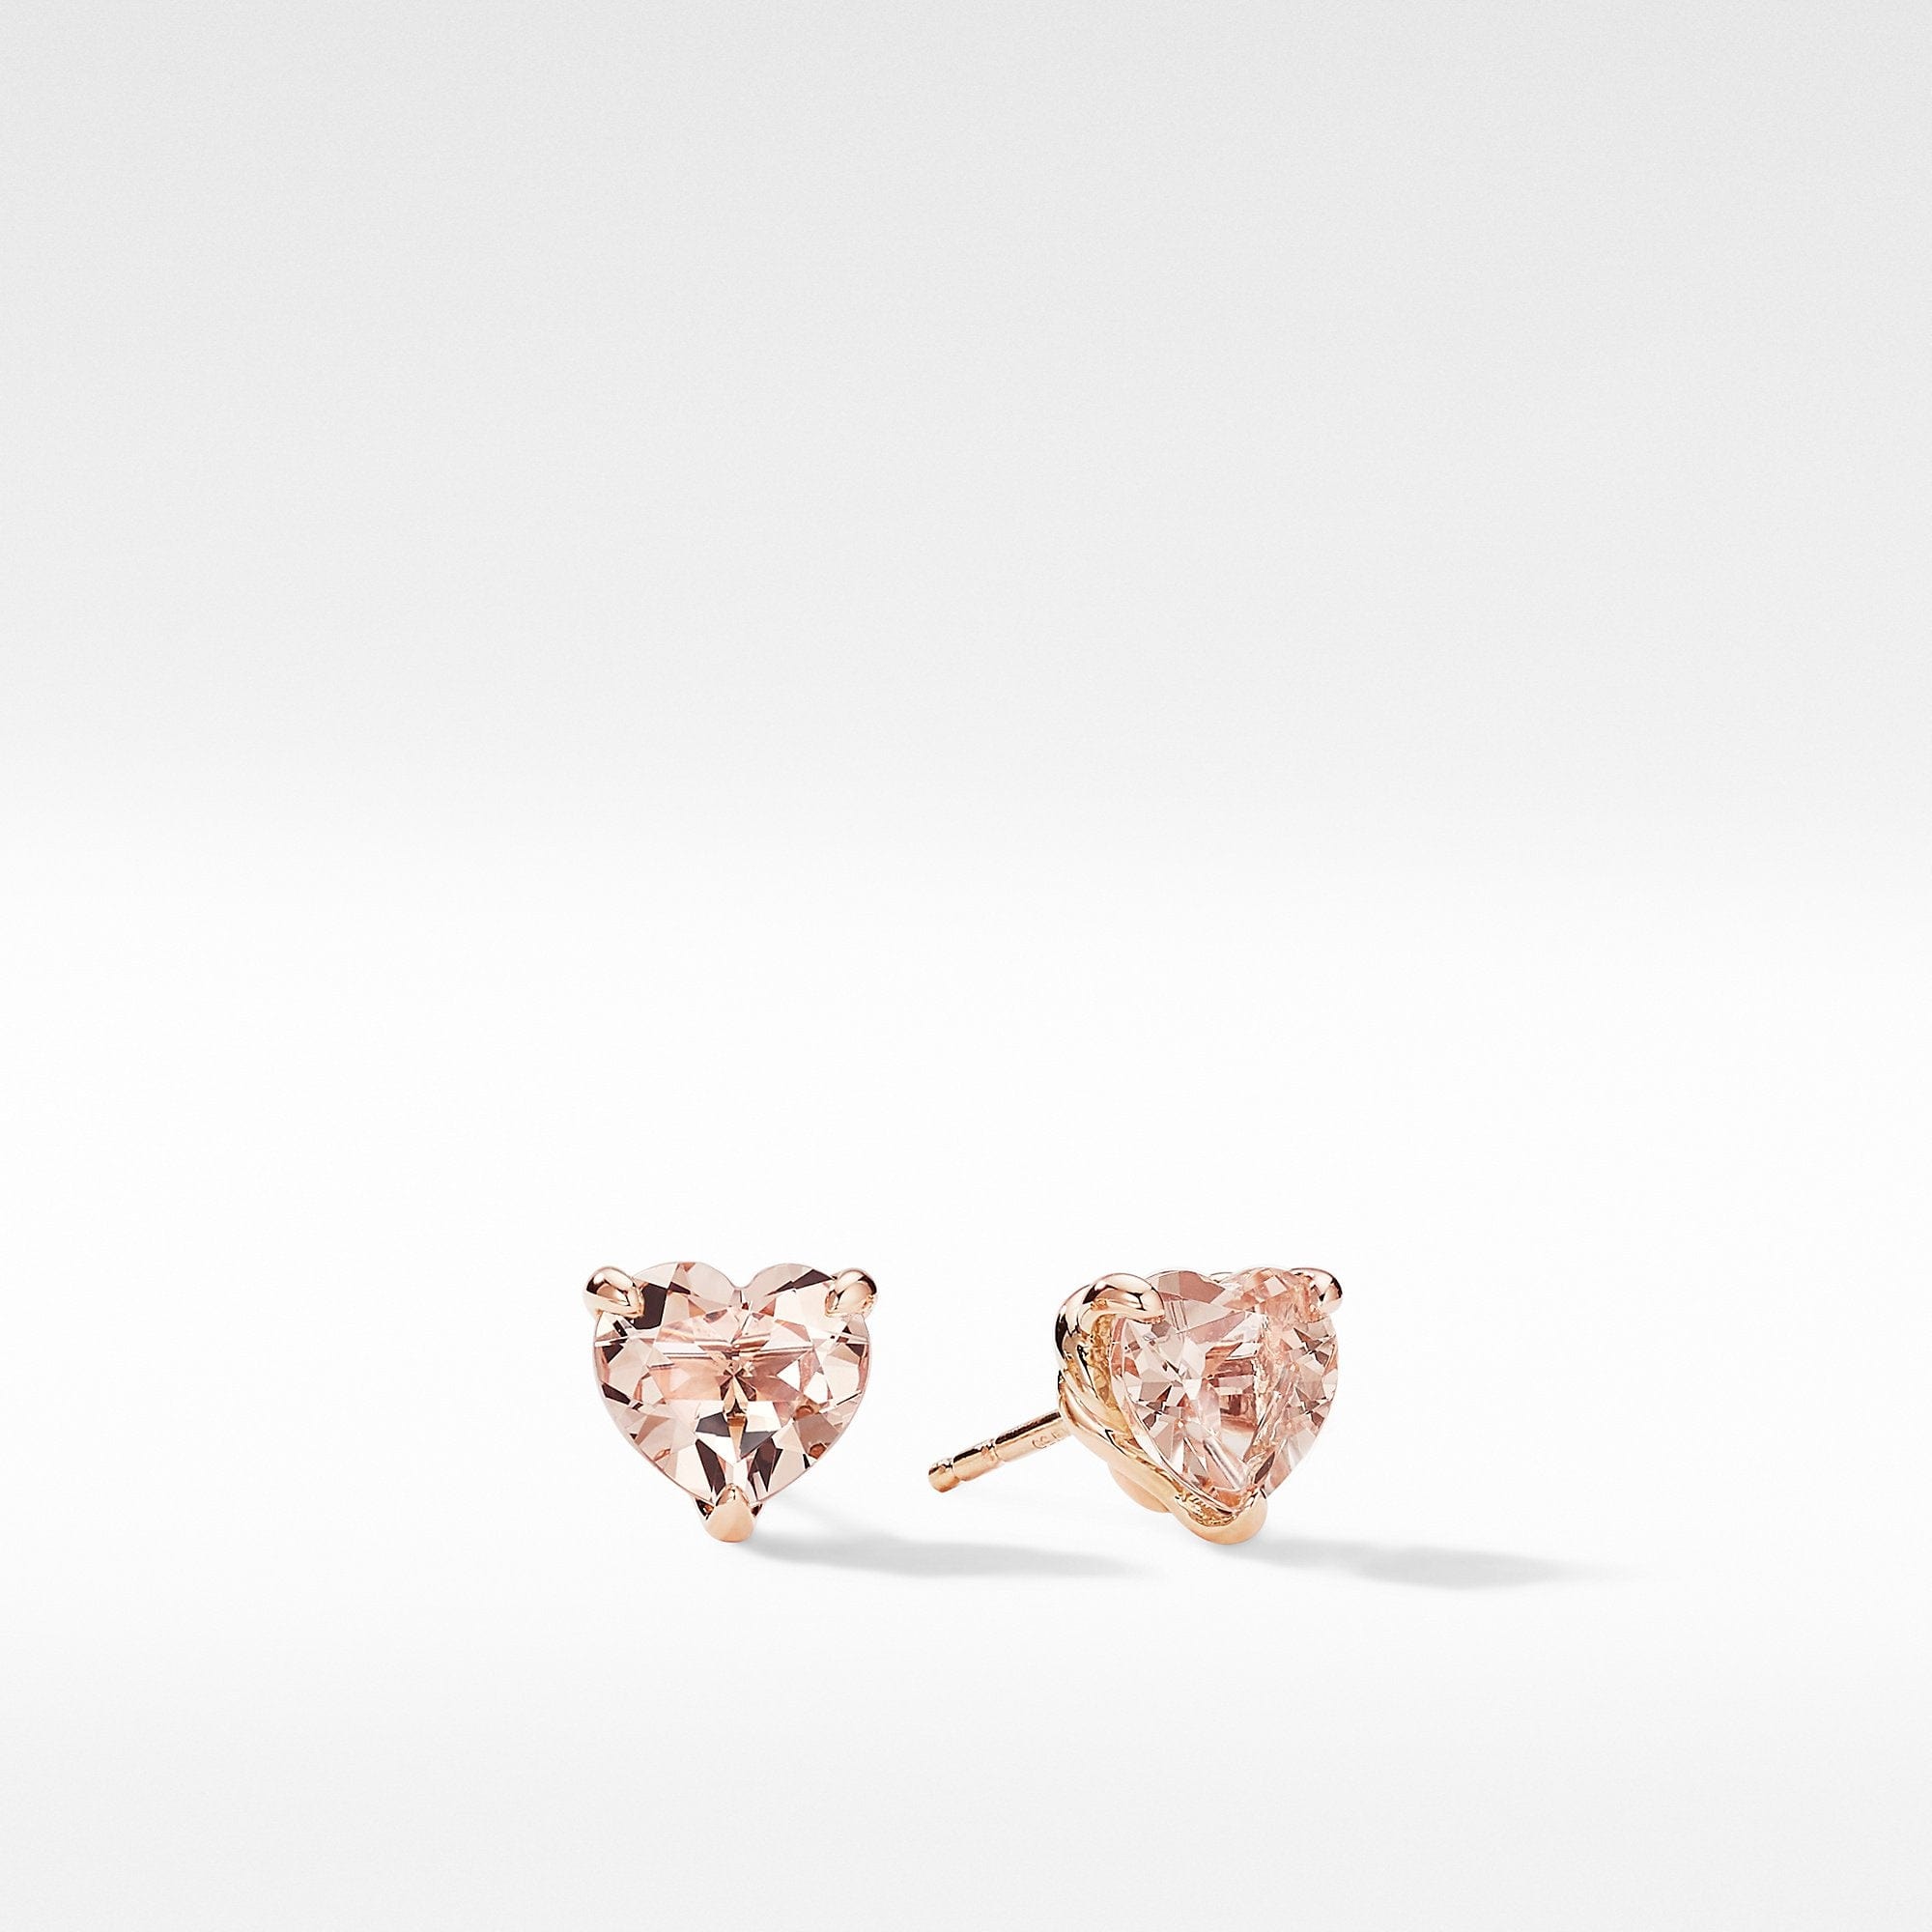 Heart Stud Earrings in 18K Rose Gold with Morganite